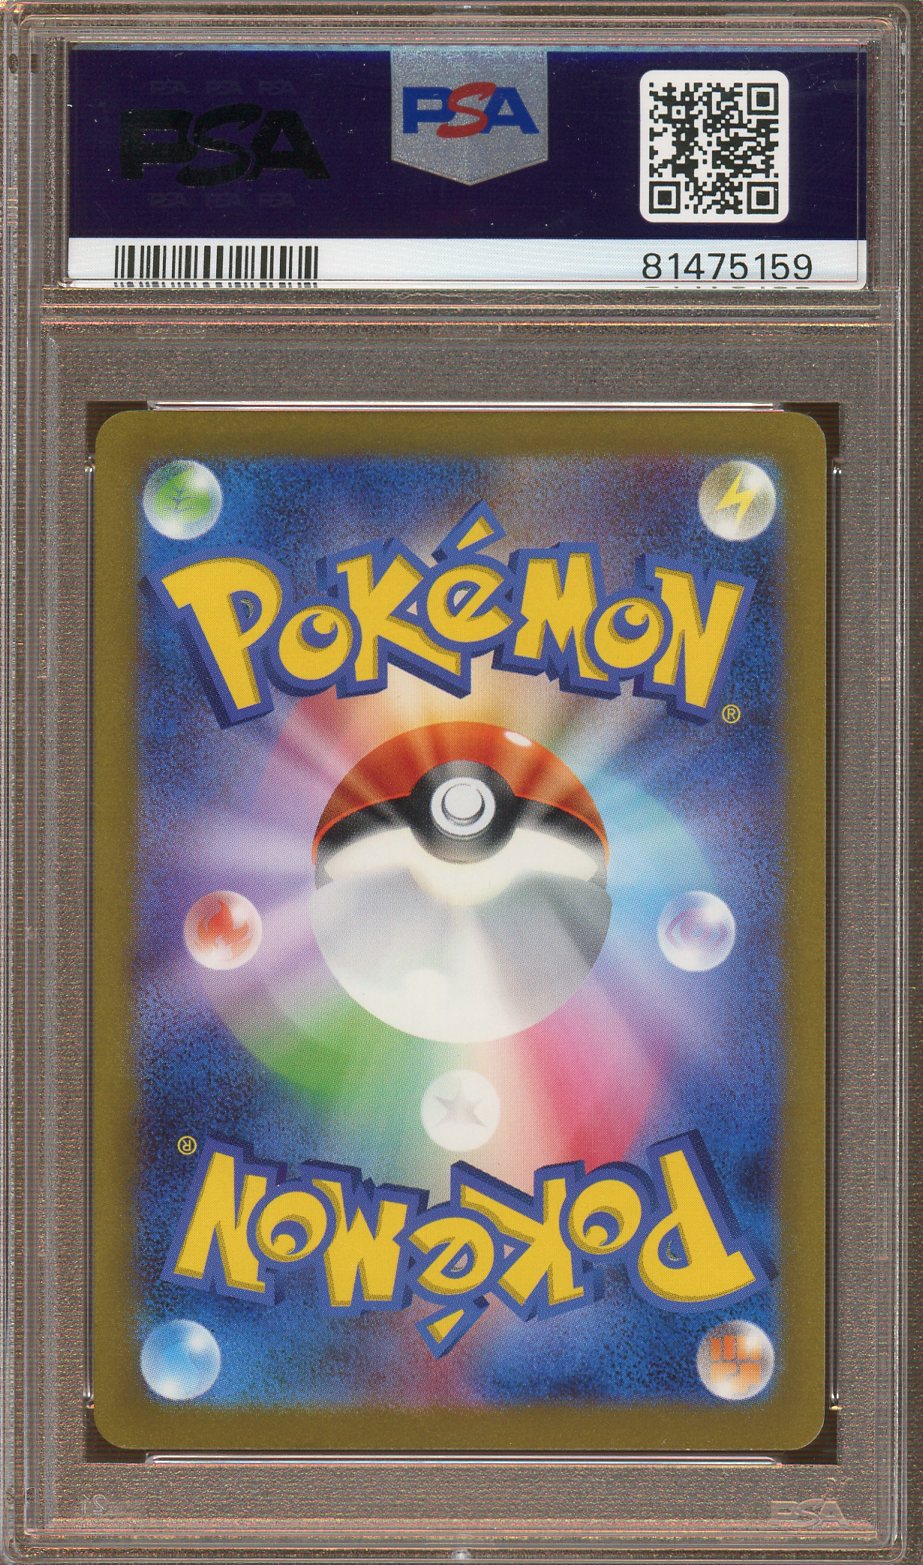 PSA - Gem Mint 10 - 2023 - Pokemon - Scarlet & Violet 151 - MewTwo- Art Rare - Japanese